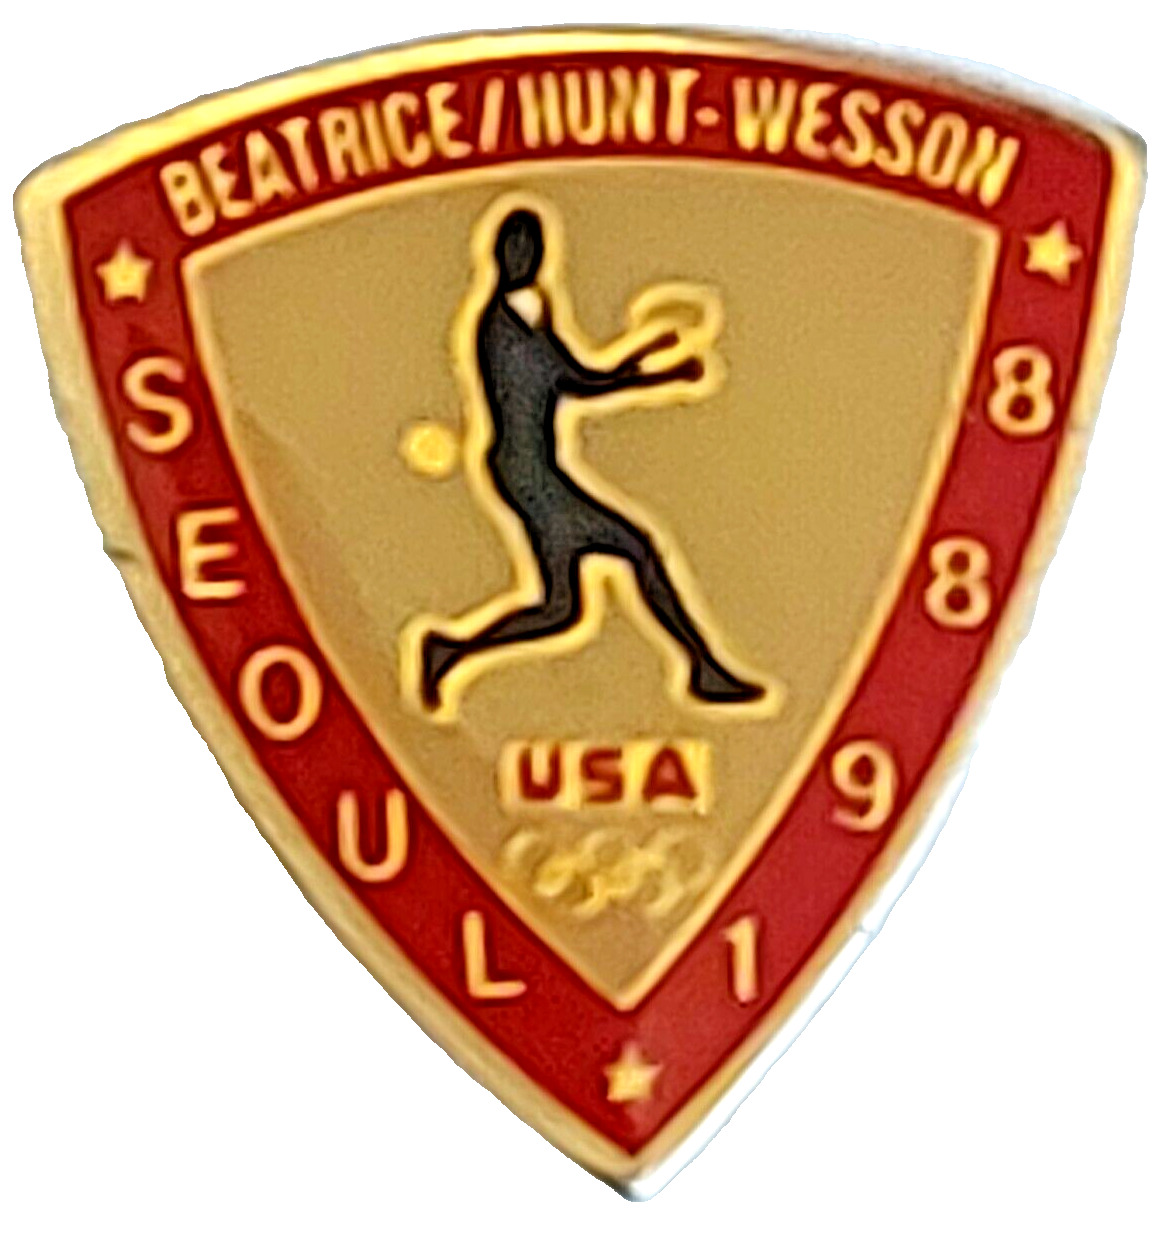 Olympics 1988 Seoul Beatrice/Hunt-Wesson Tennis Lapel Pin